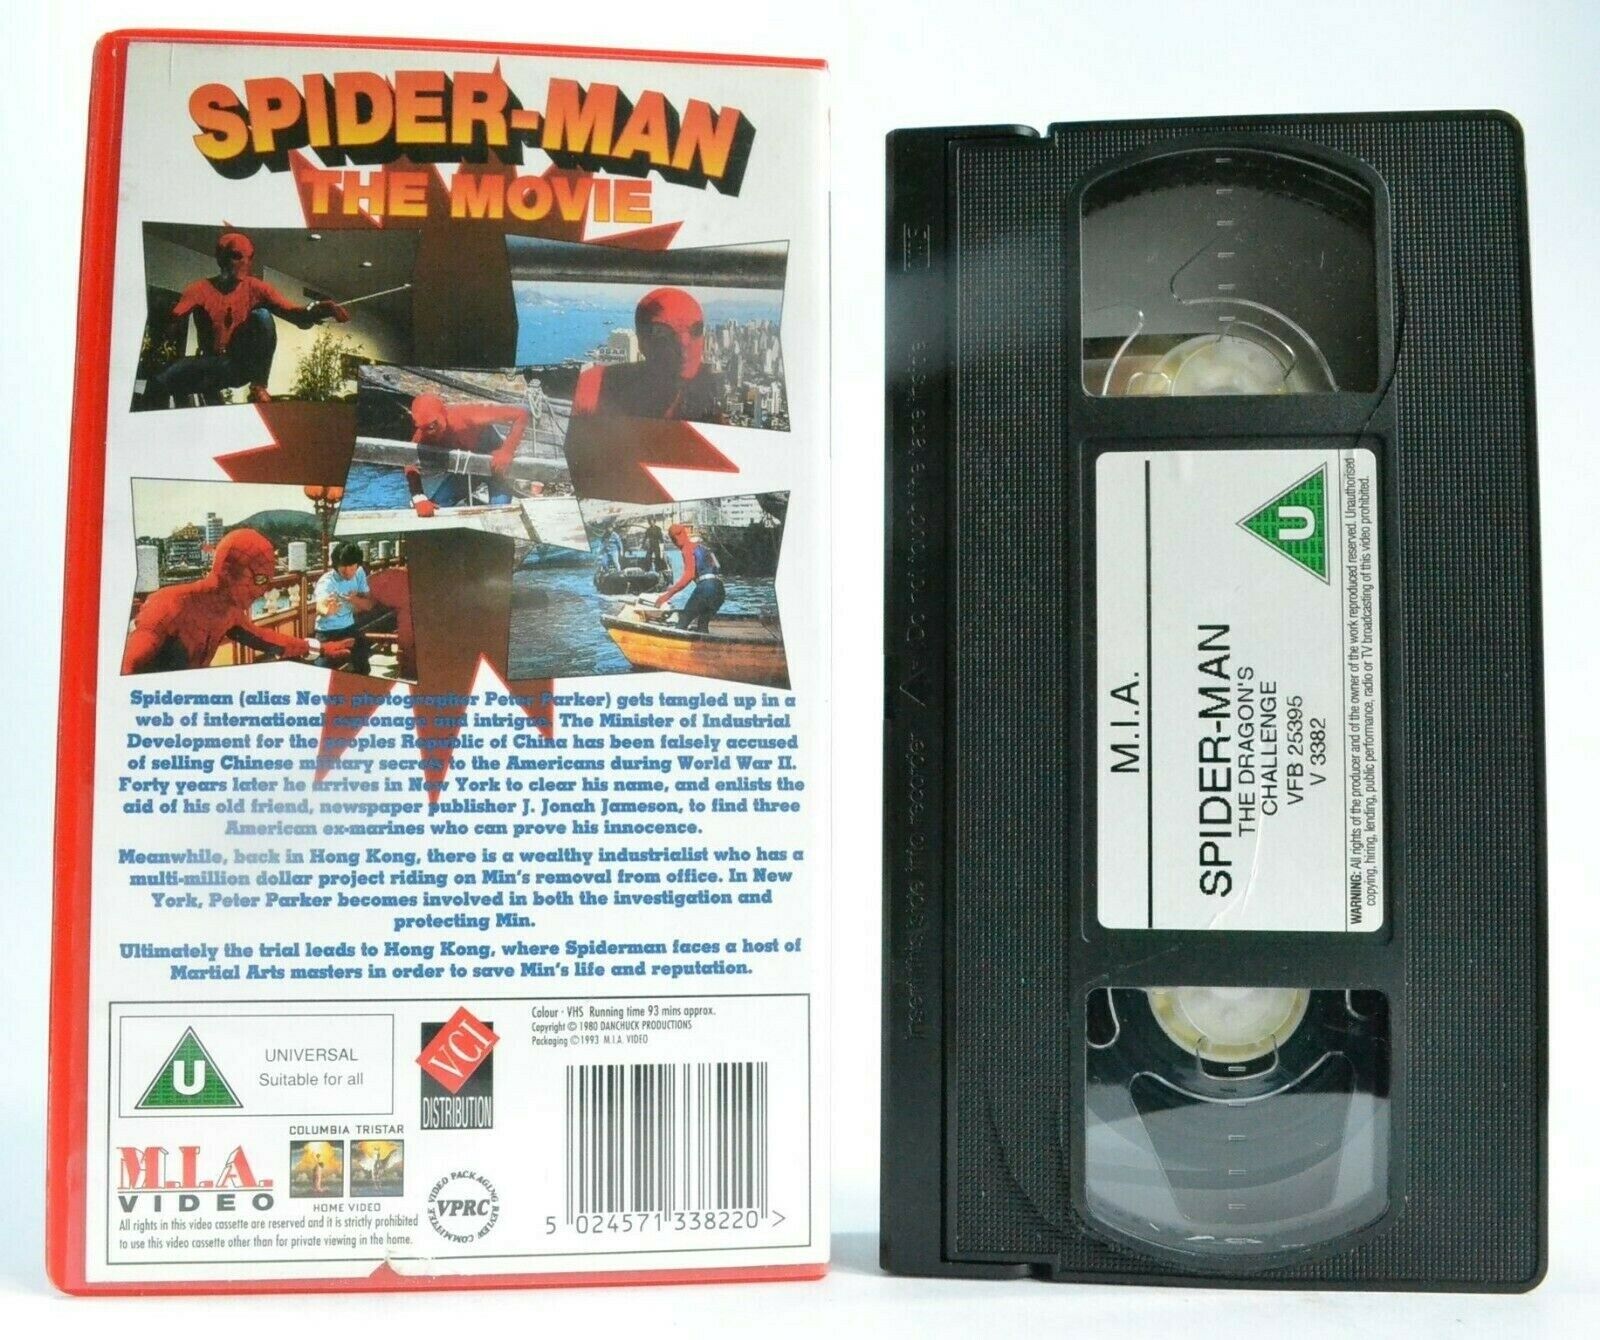 Spider Man: The Dragon's Challenge: (1979) Made For T.V. - Children's - Pal VHS-